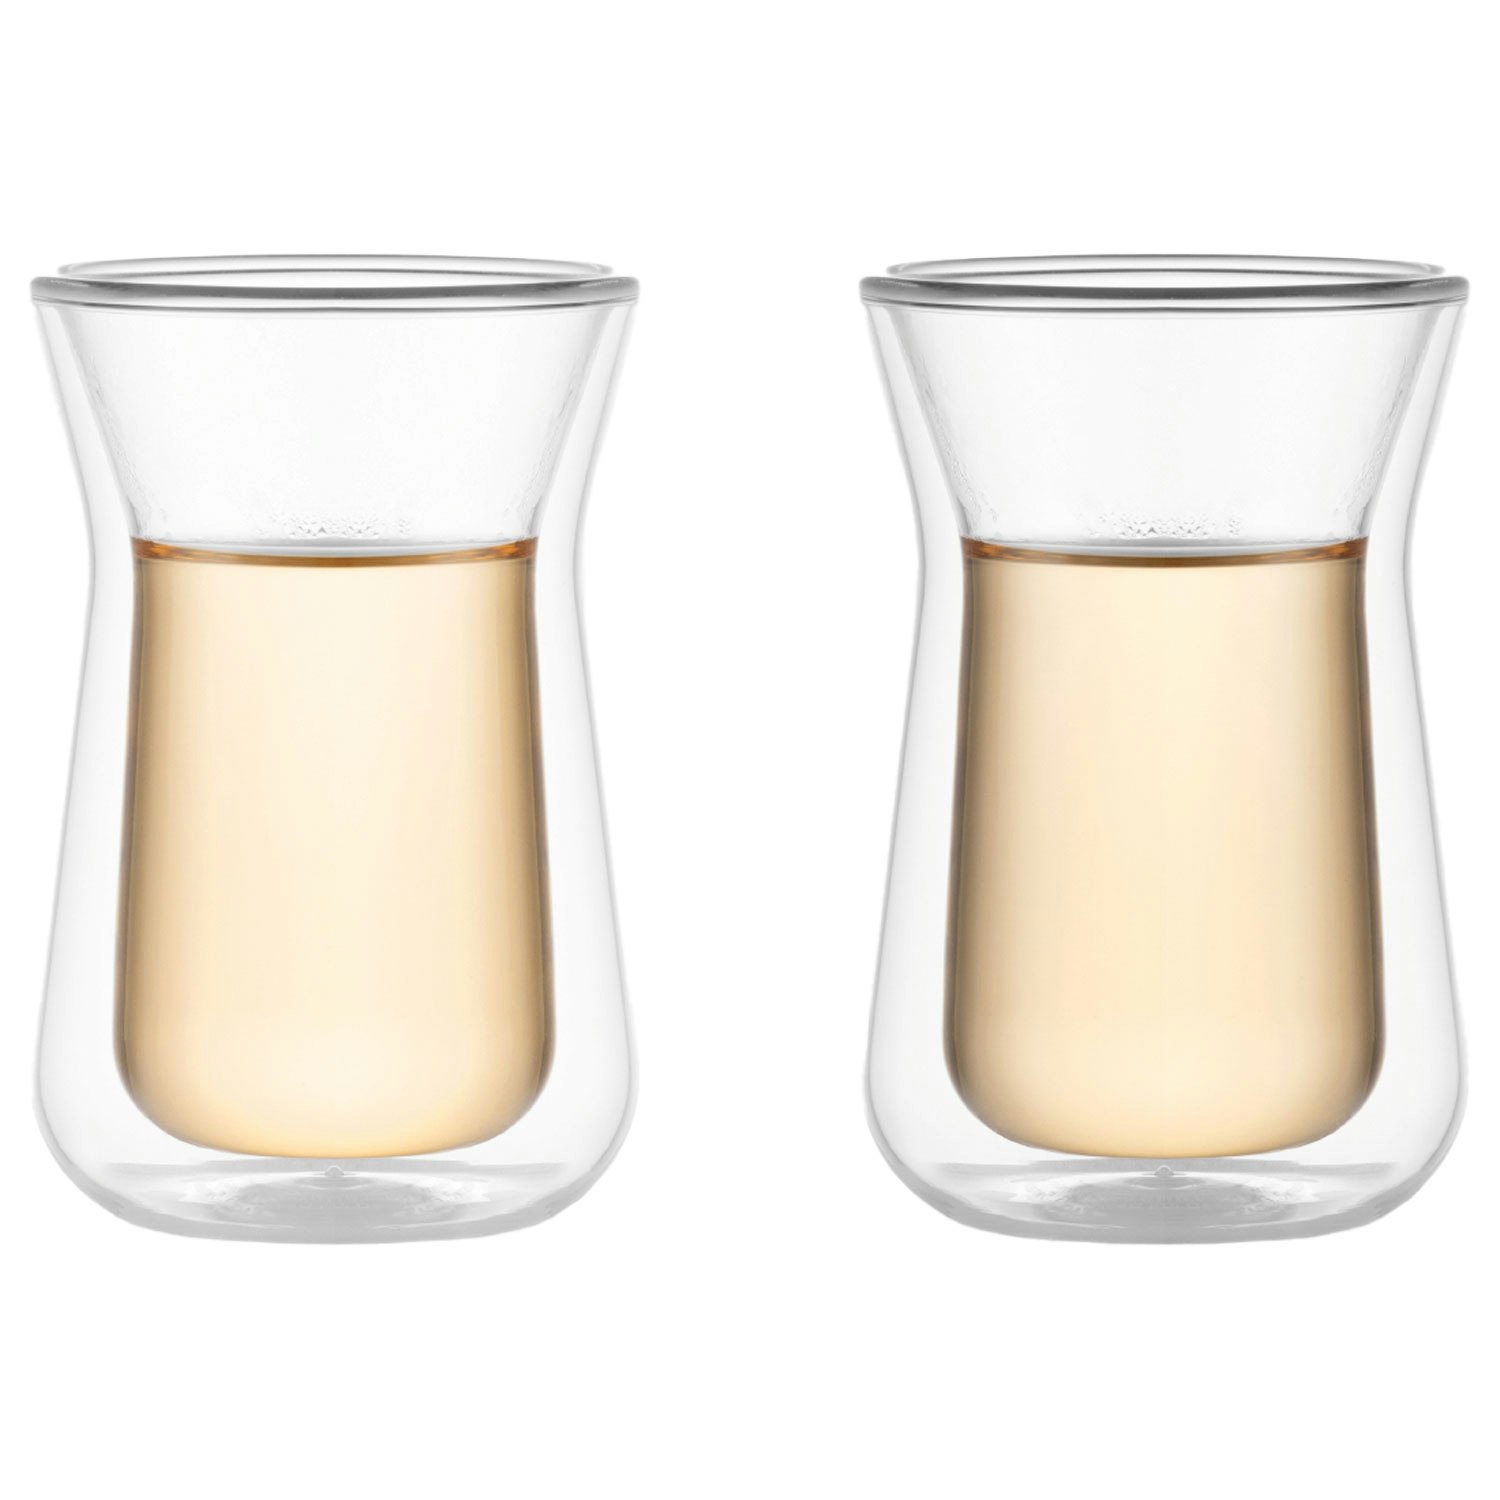 https://royaldesign.com/image/2/bodum-melior-double-walled-teacups-2-pack-10-cl-0